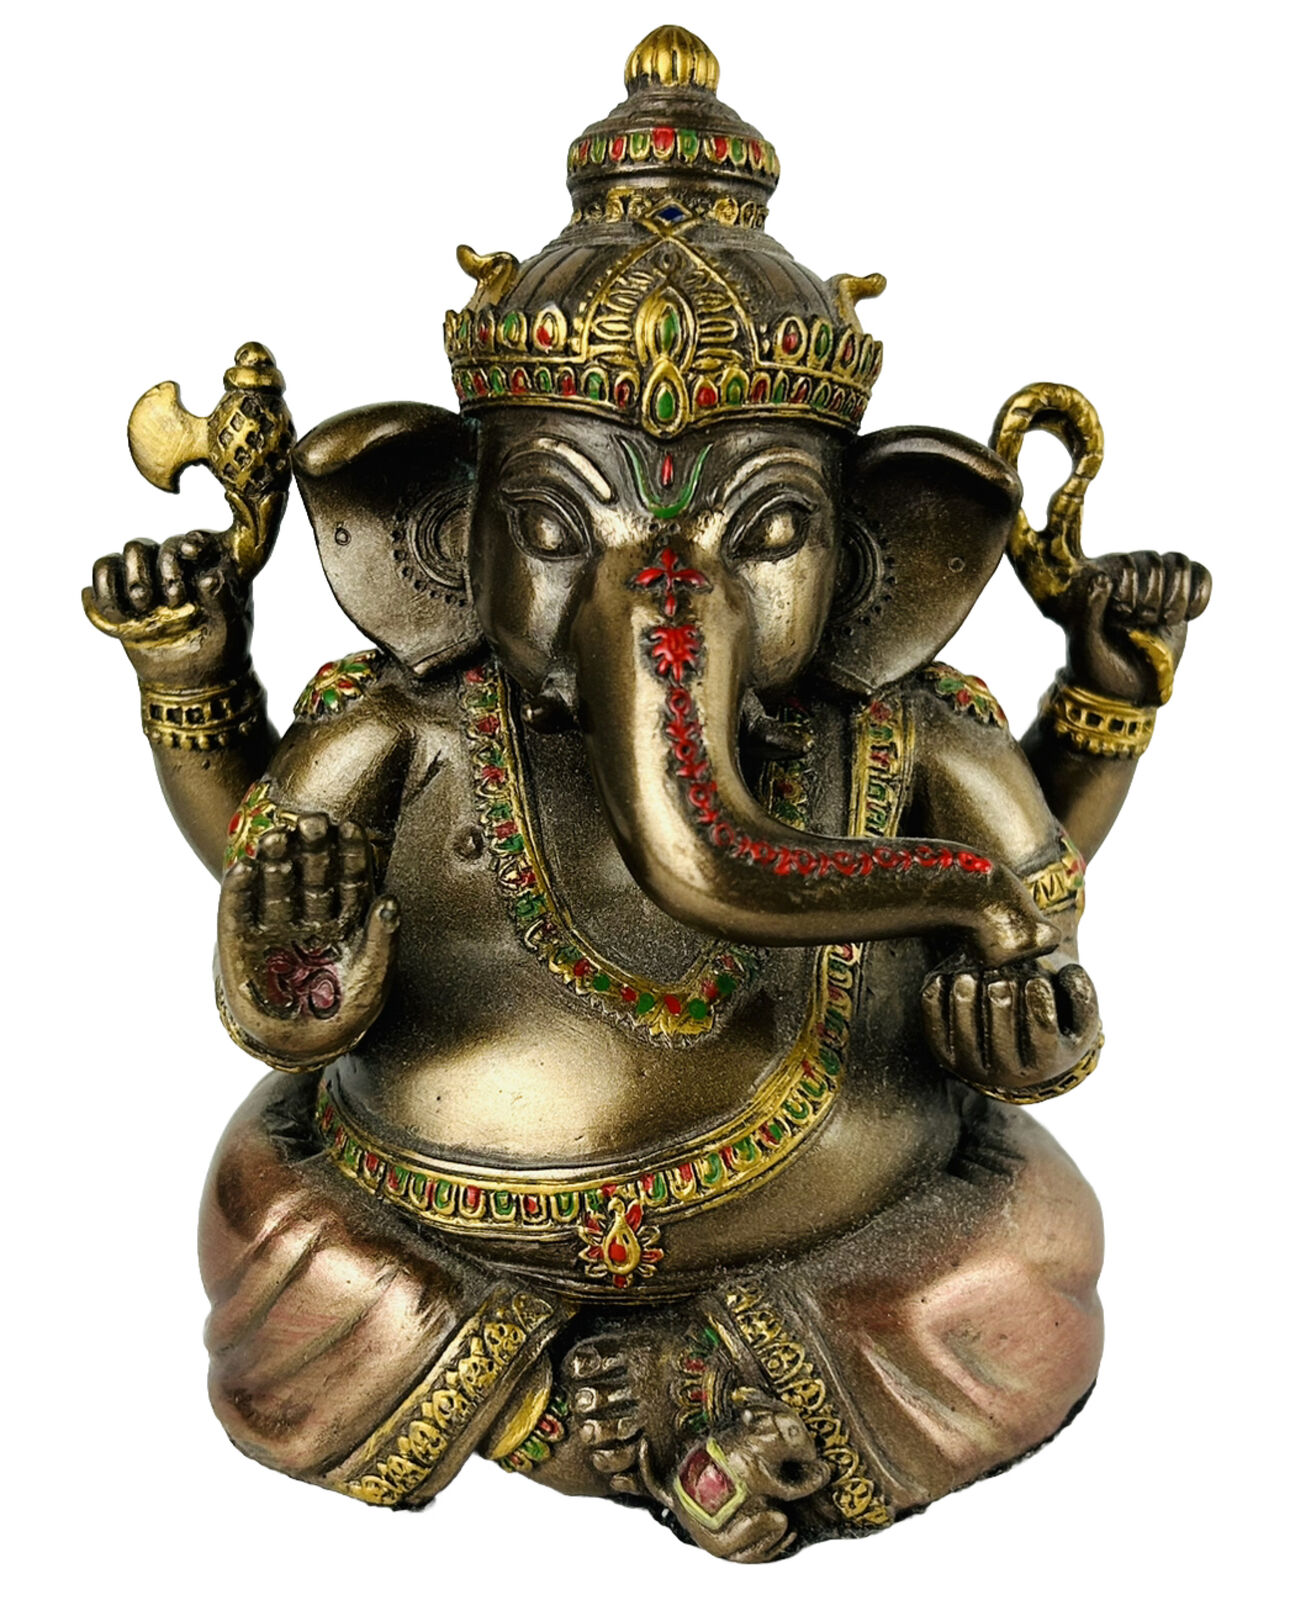 Lord Ganesha Statue Hindu elephant god summit collection Small 4.5”